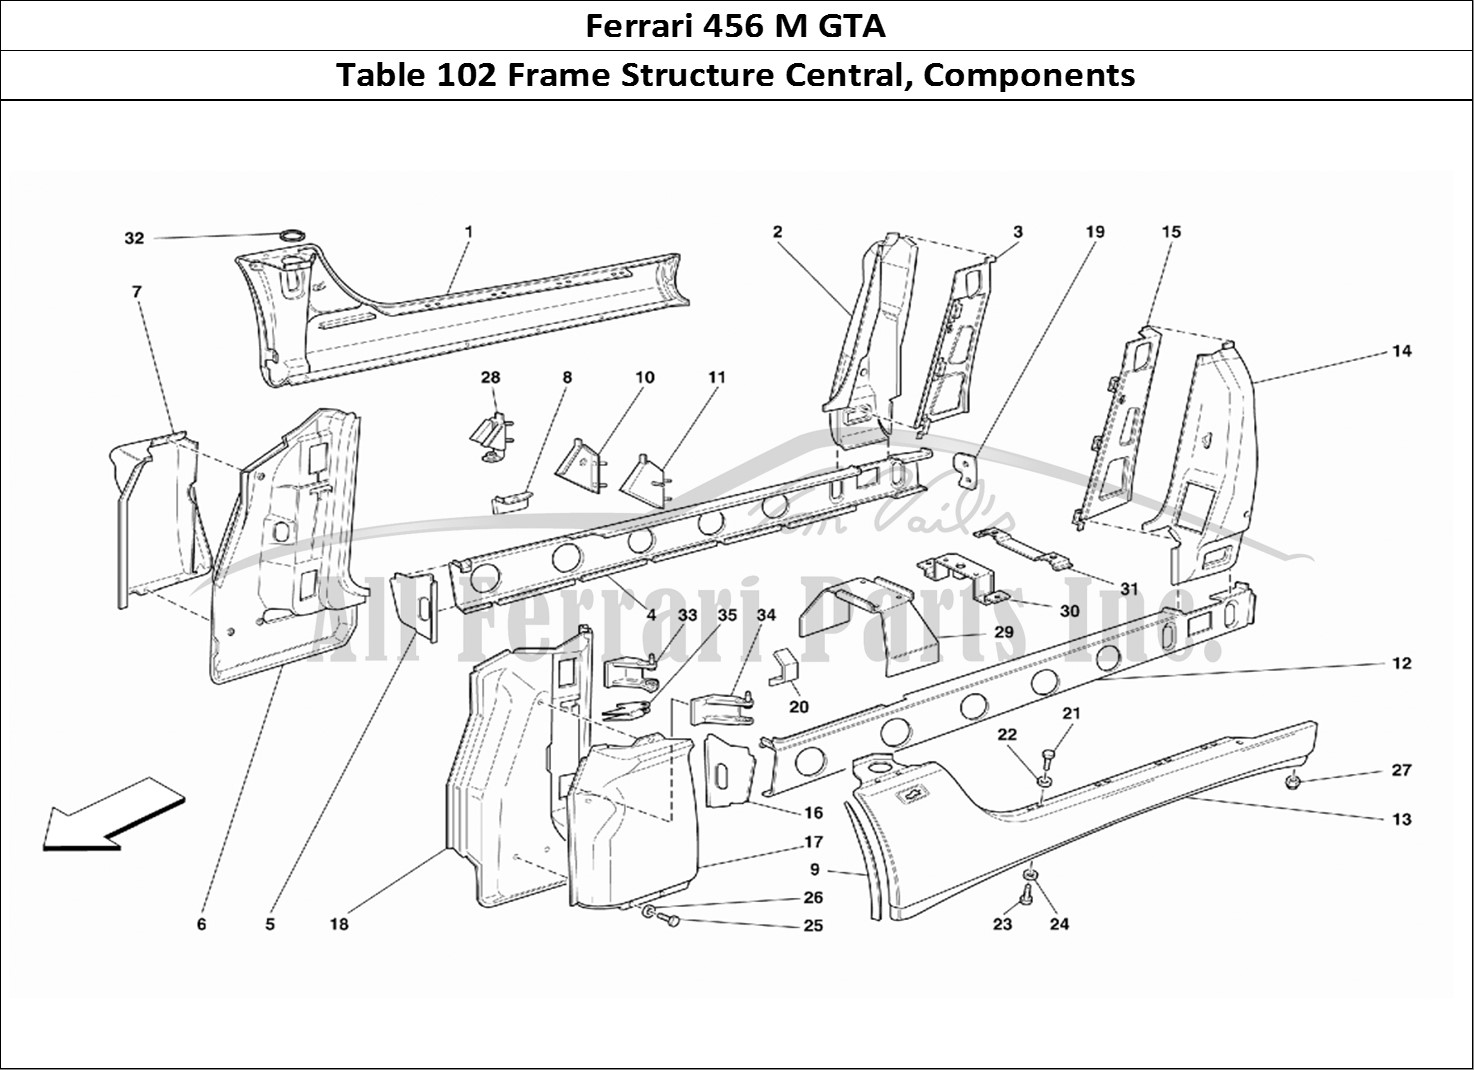 Ferrari Parts Ferrari 456 M GT Page 102 Central Structures and Co